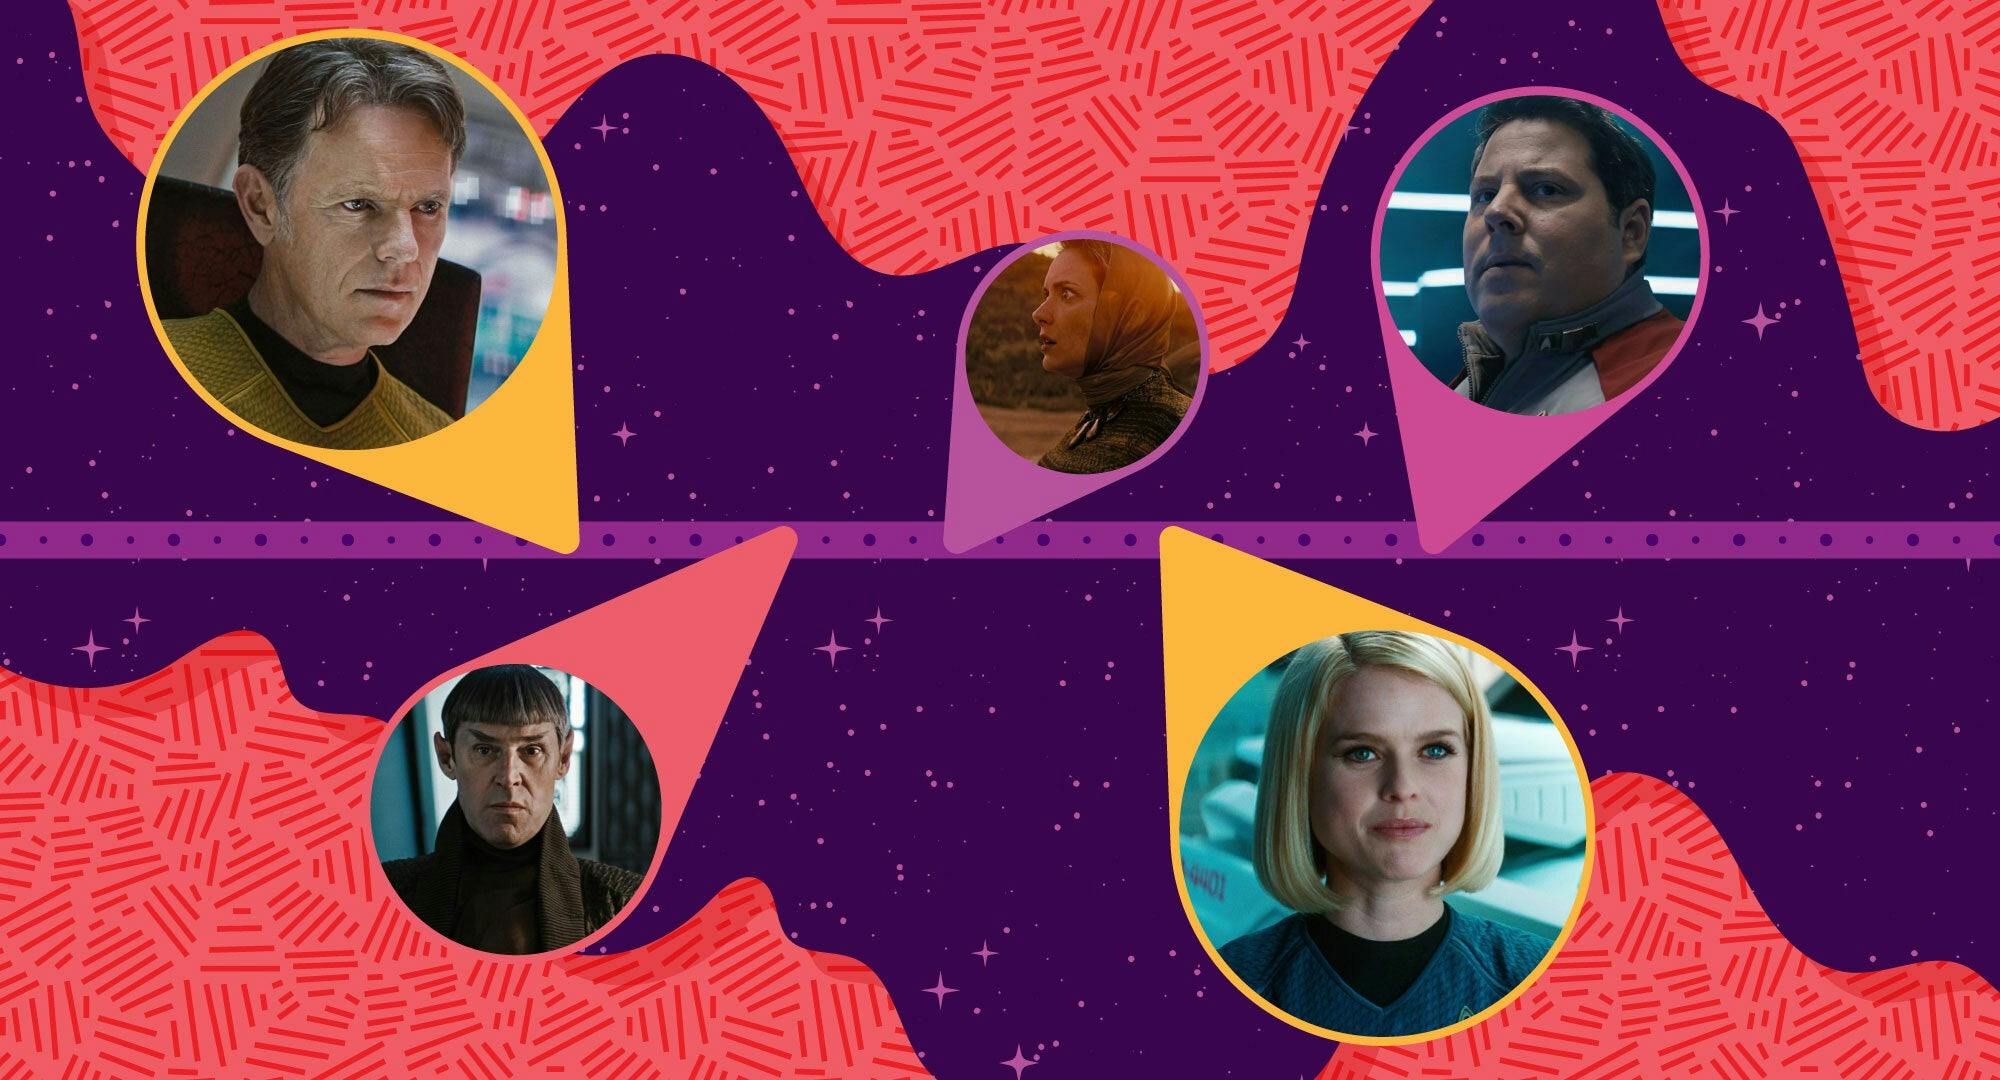 Illustrated banner featuring Kelvin timeline characters Pike, Sarek, Amanda Grayson, Carol Marcus, and Finnegan